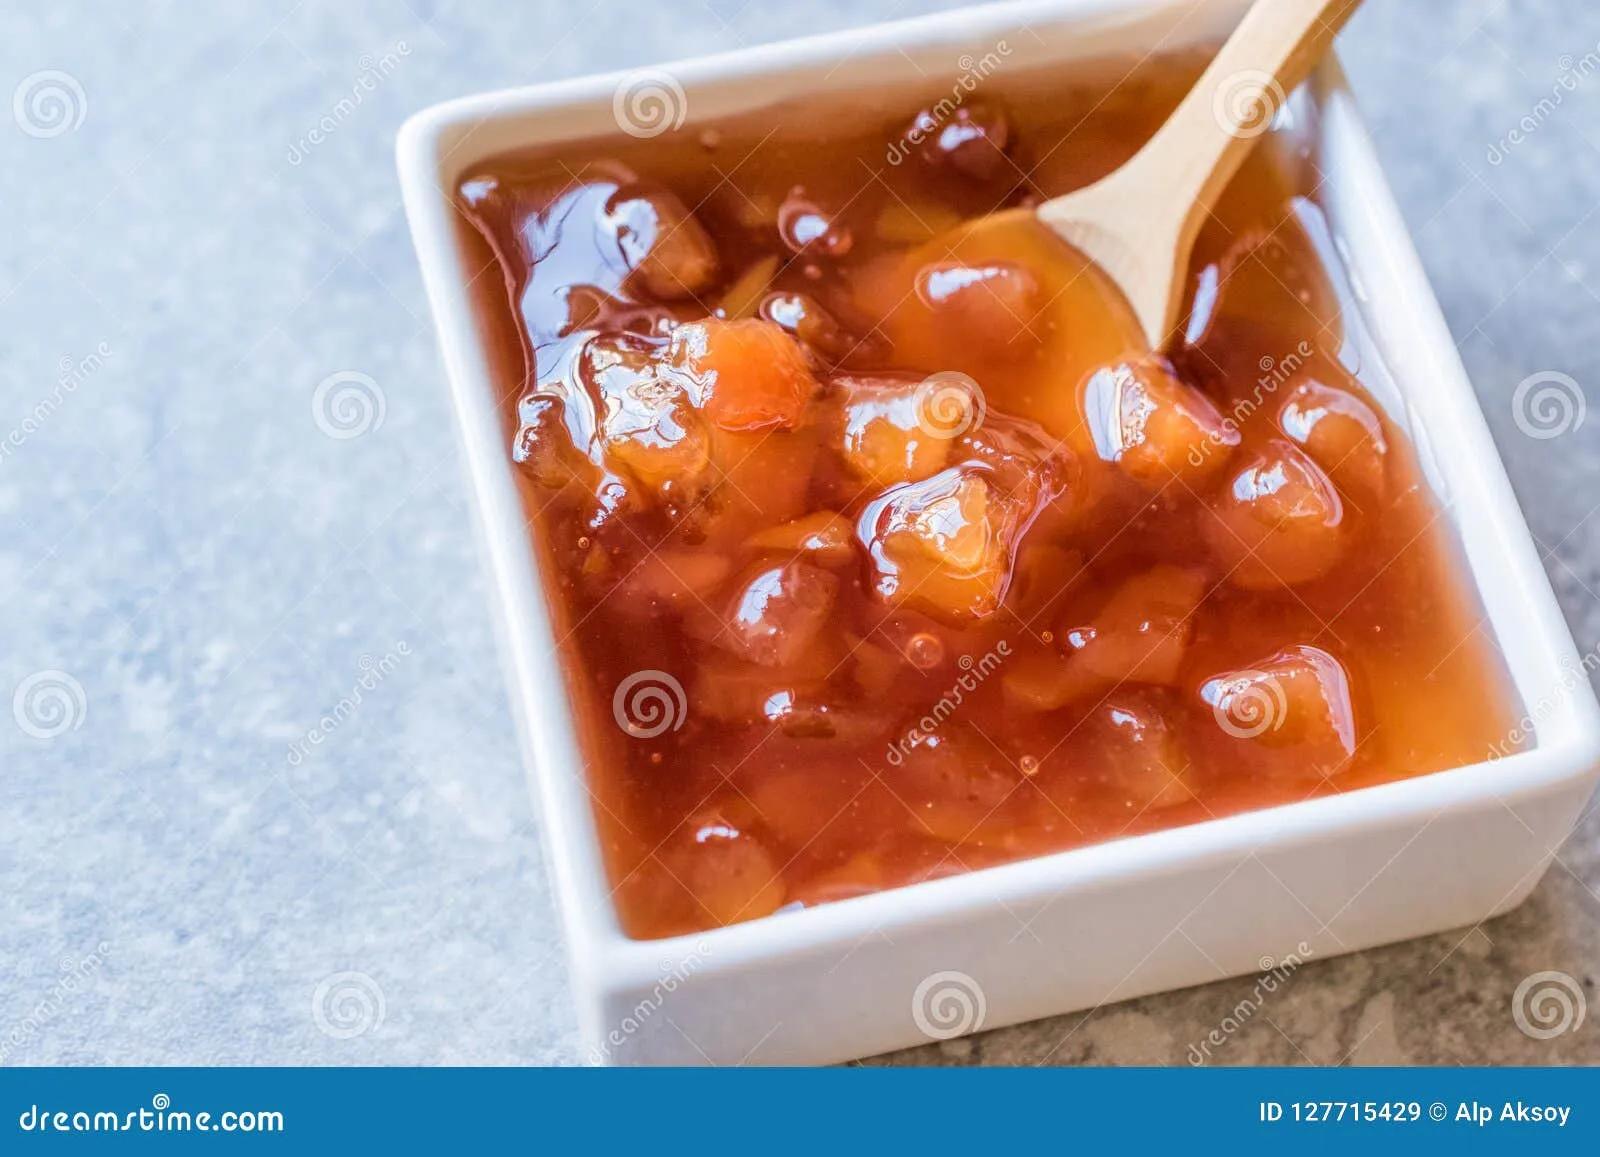 Homemade Quince Jam in Square Ceramic Bowl / Marmalade. Stock Image ...